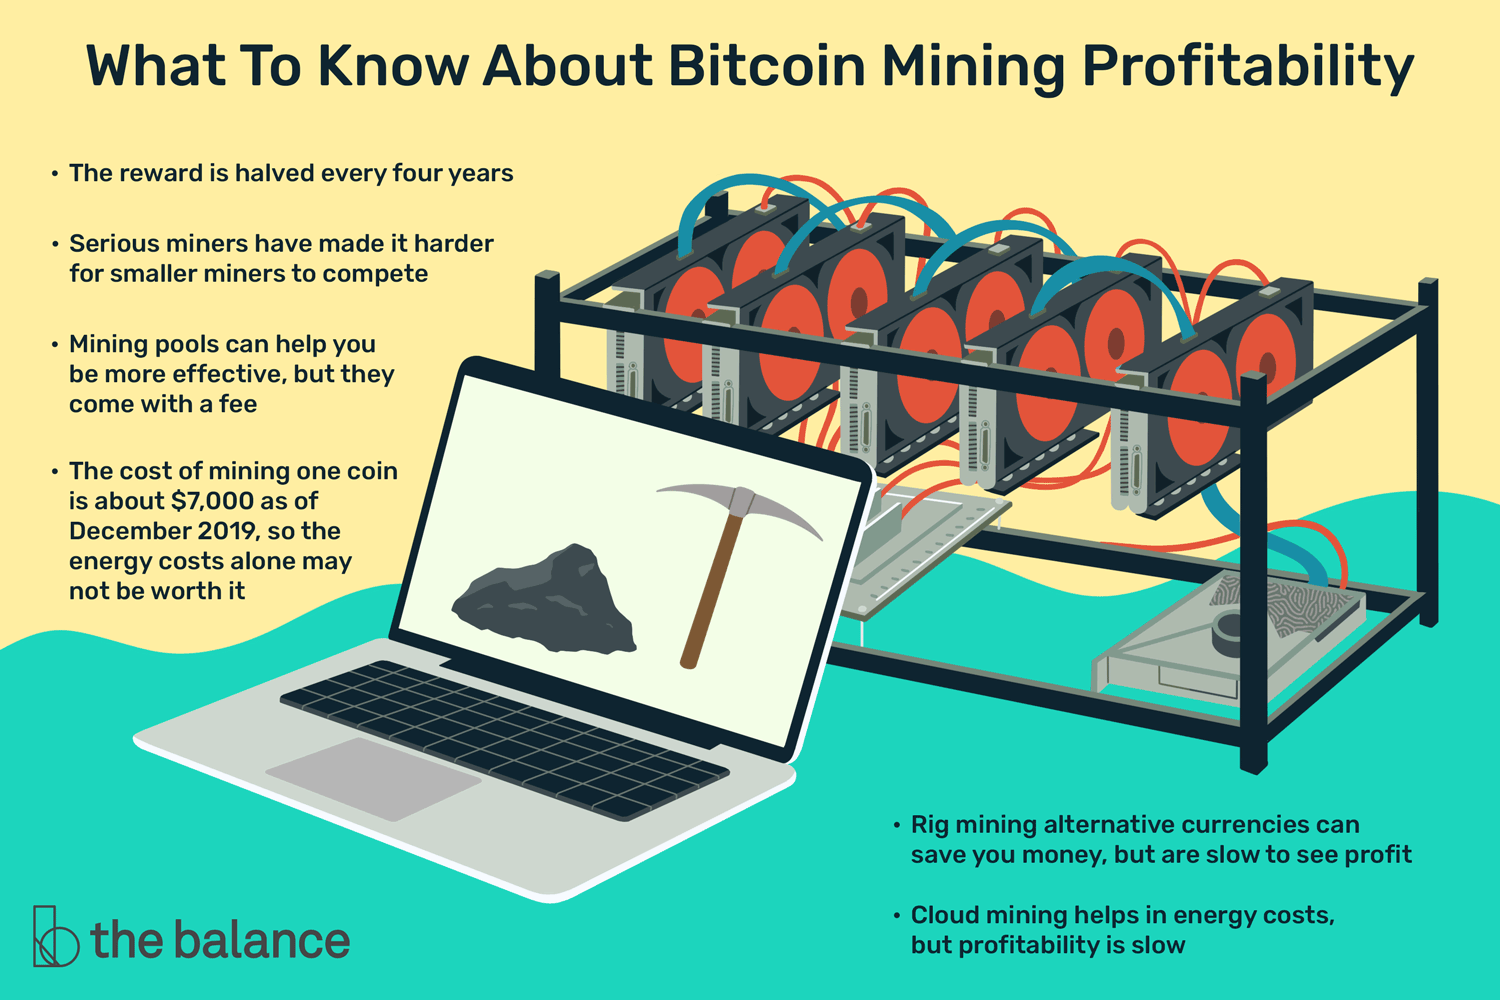 Bitcoin Mining Profit Calculator